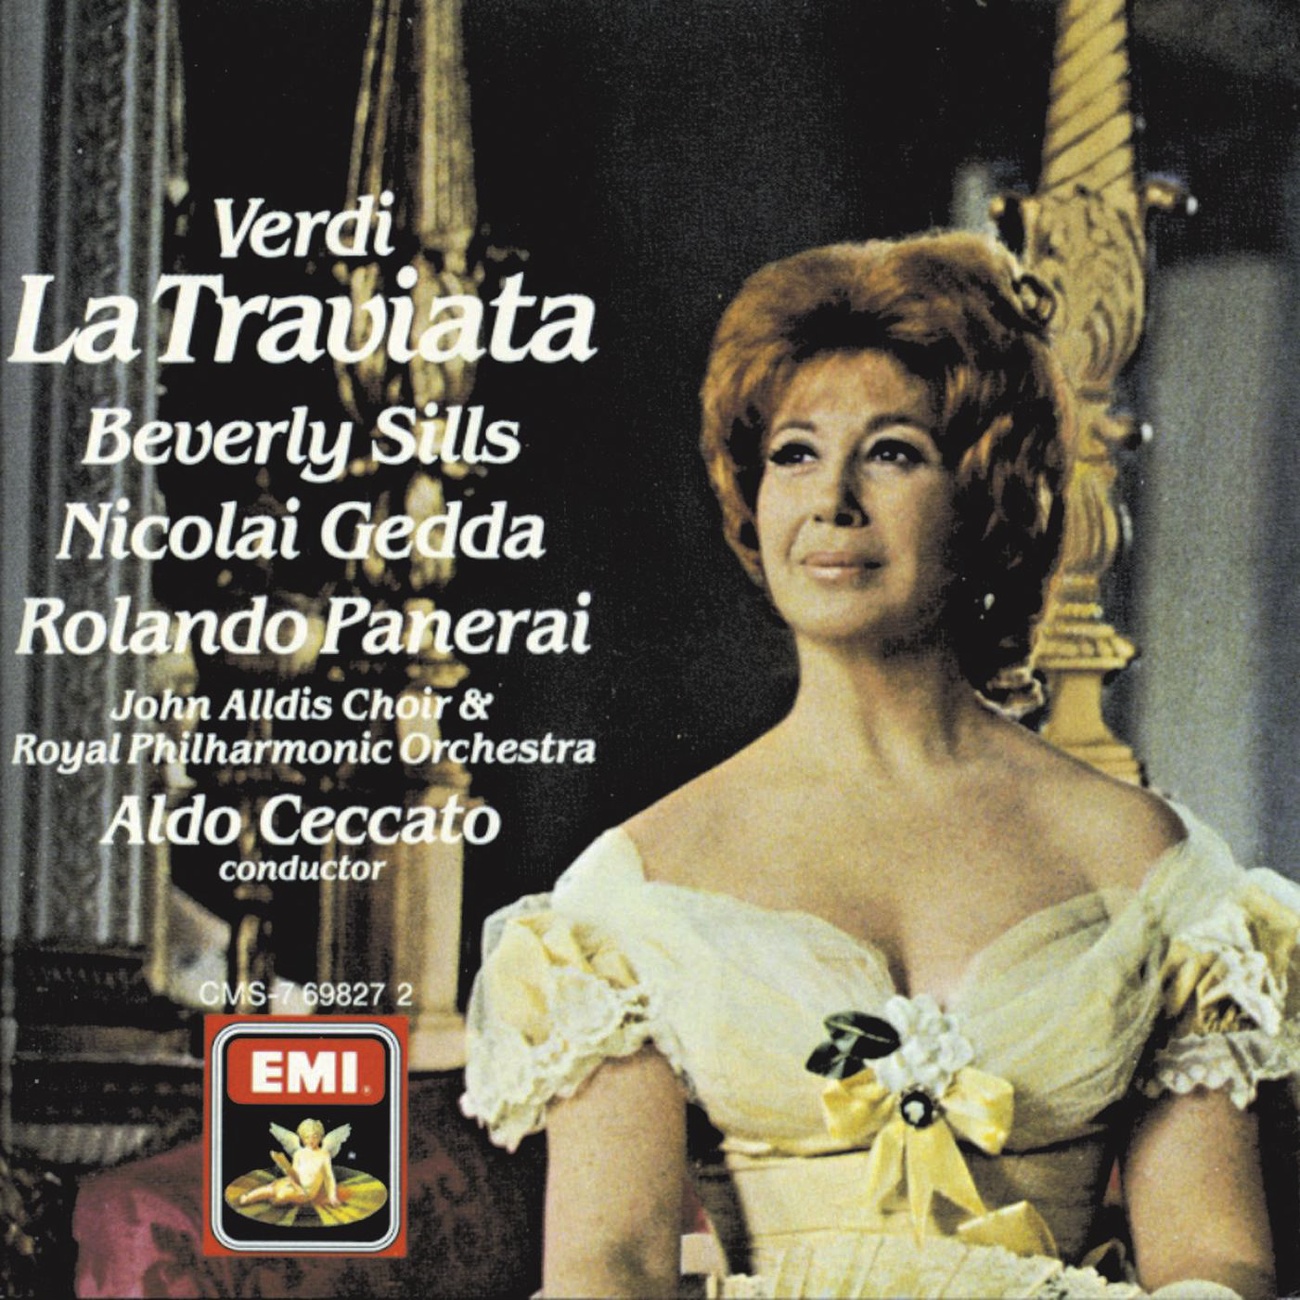 La Traviata (1988 Digital Remaster), Act II, Scene I: Annina, done vieni? (Alfredo/Annina)